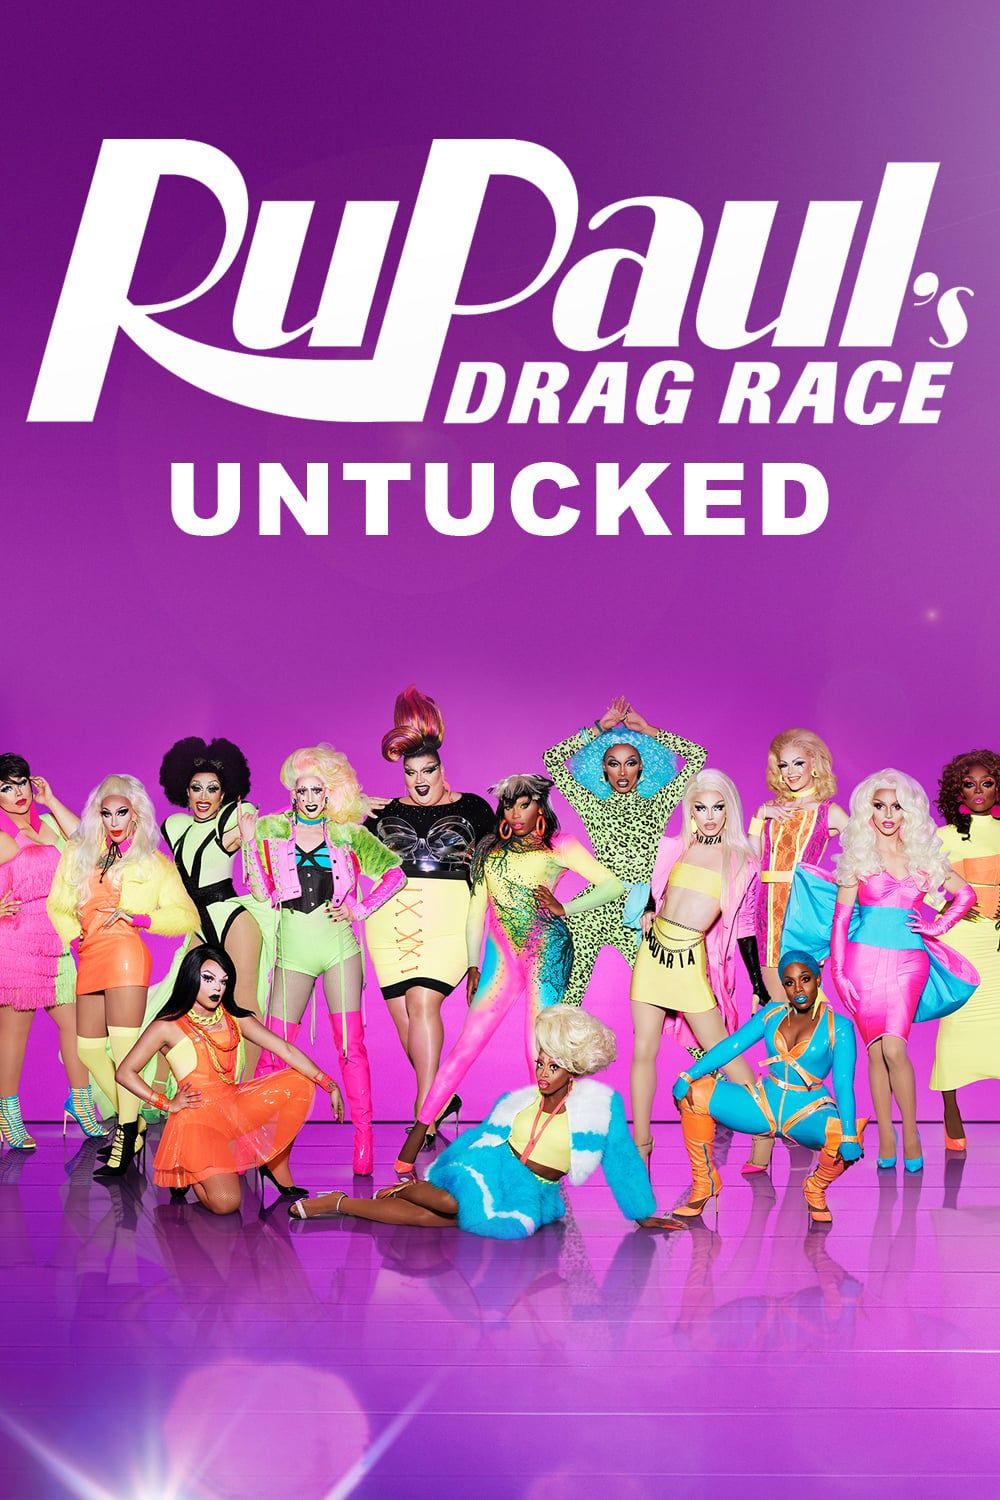 RuPaul's Drag Race: Untucked! -  Season 13